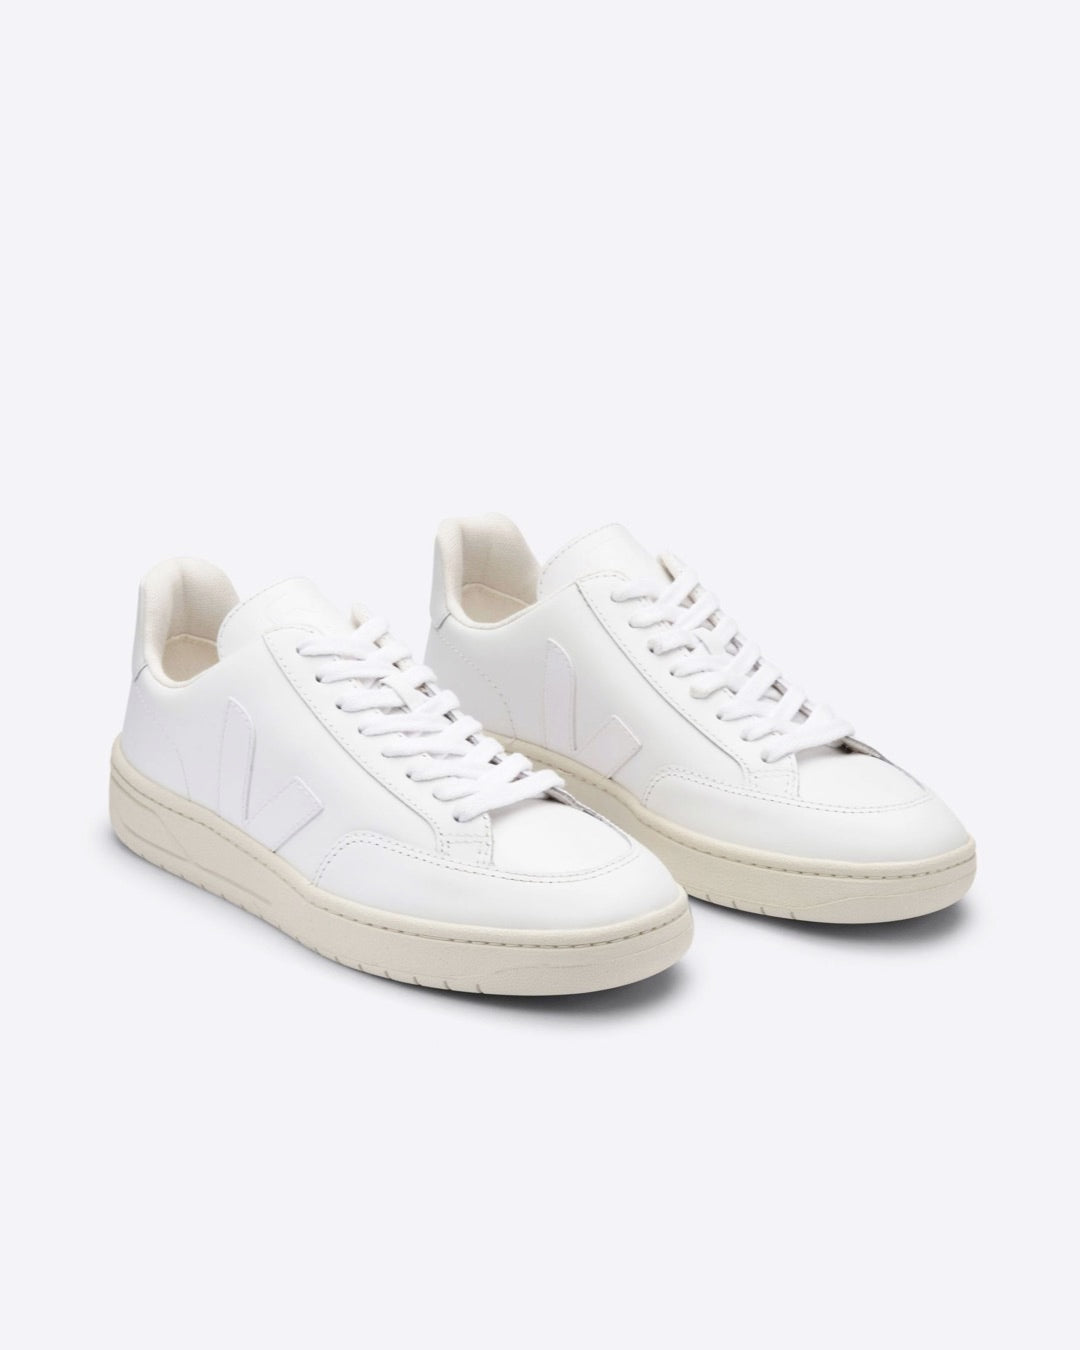 Veja - V-12 Leather Extra-White Sneakers by Veja - Prae Store